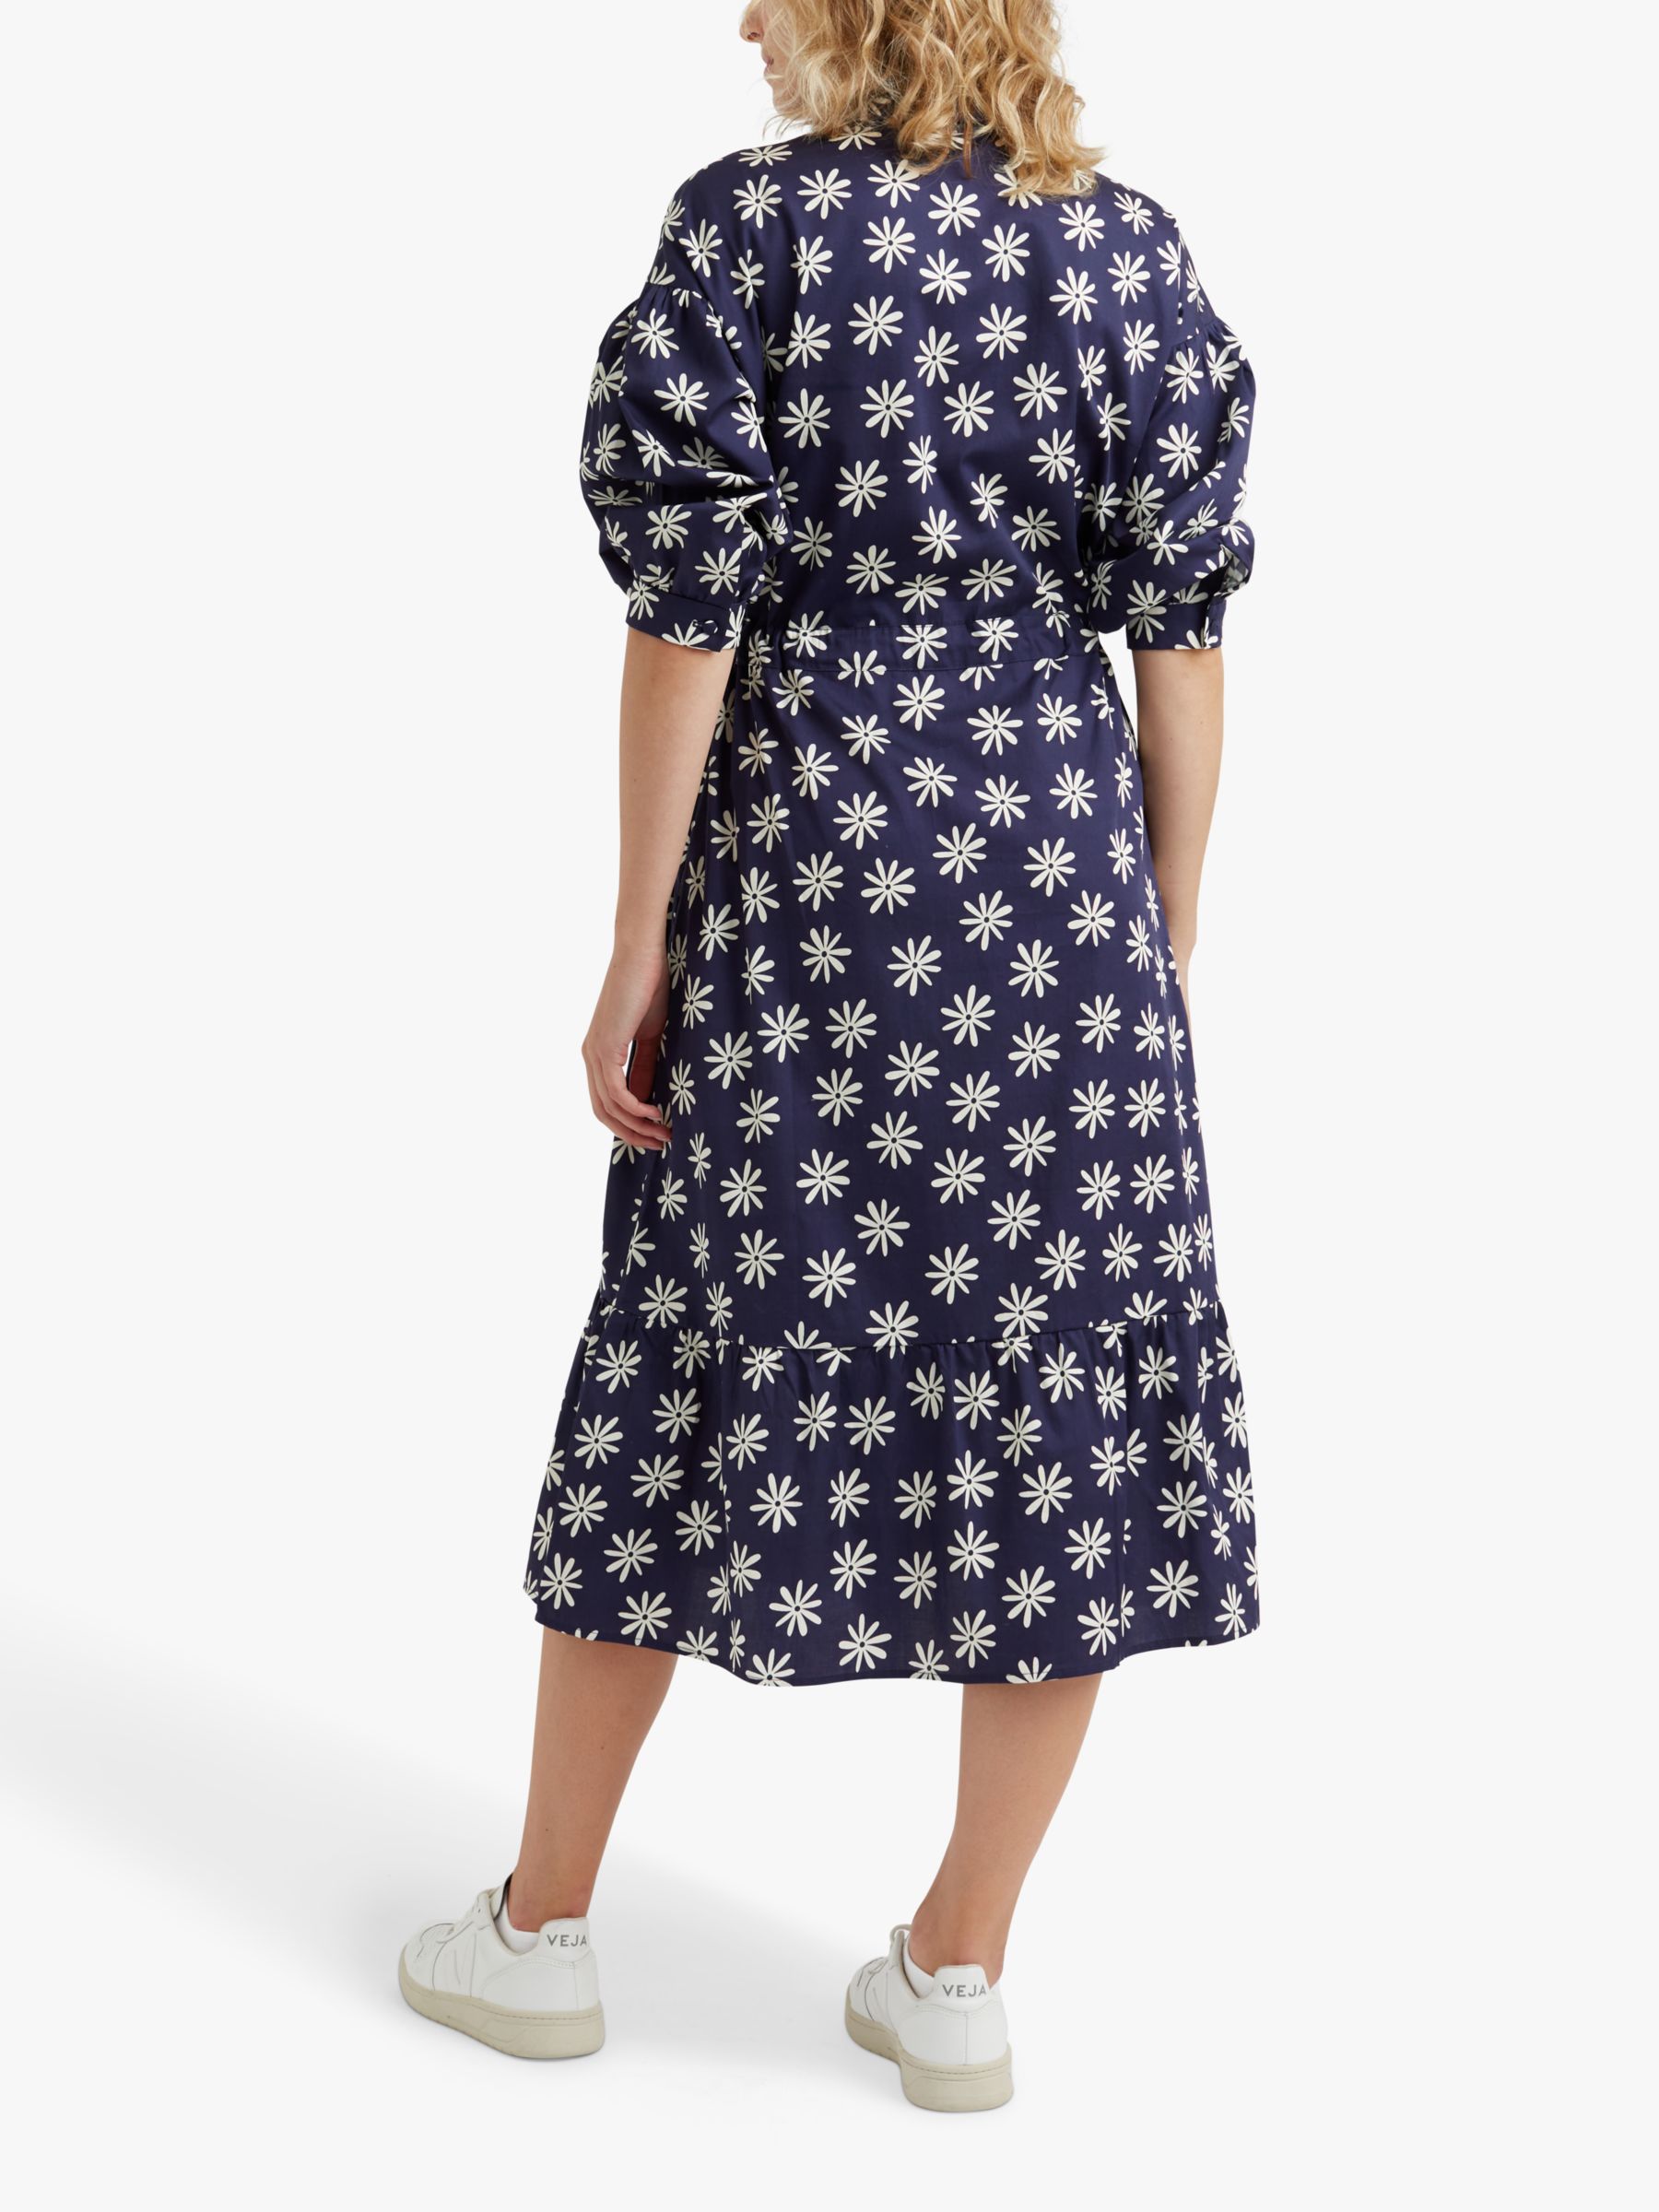 Chinti & Parker Ditsy Floral Midi Dress, Navy/Cream, 12